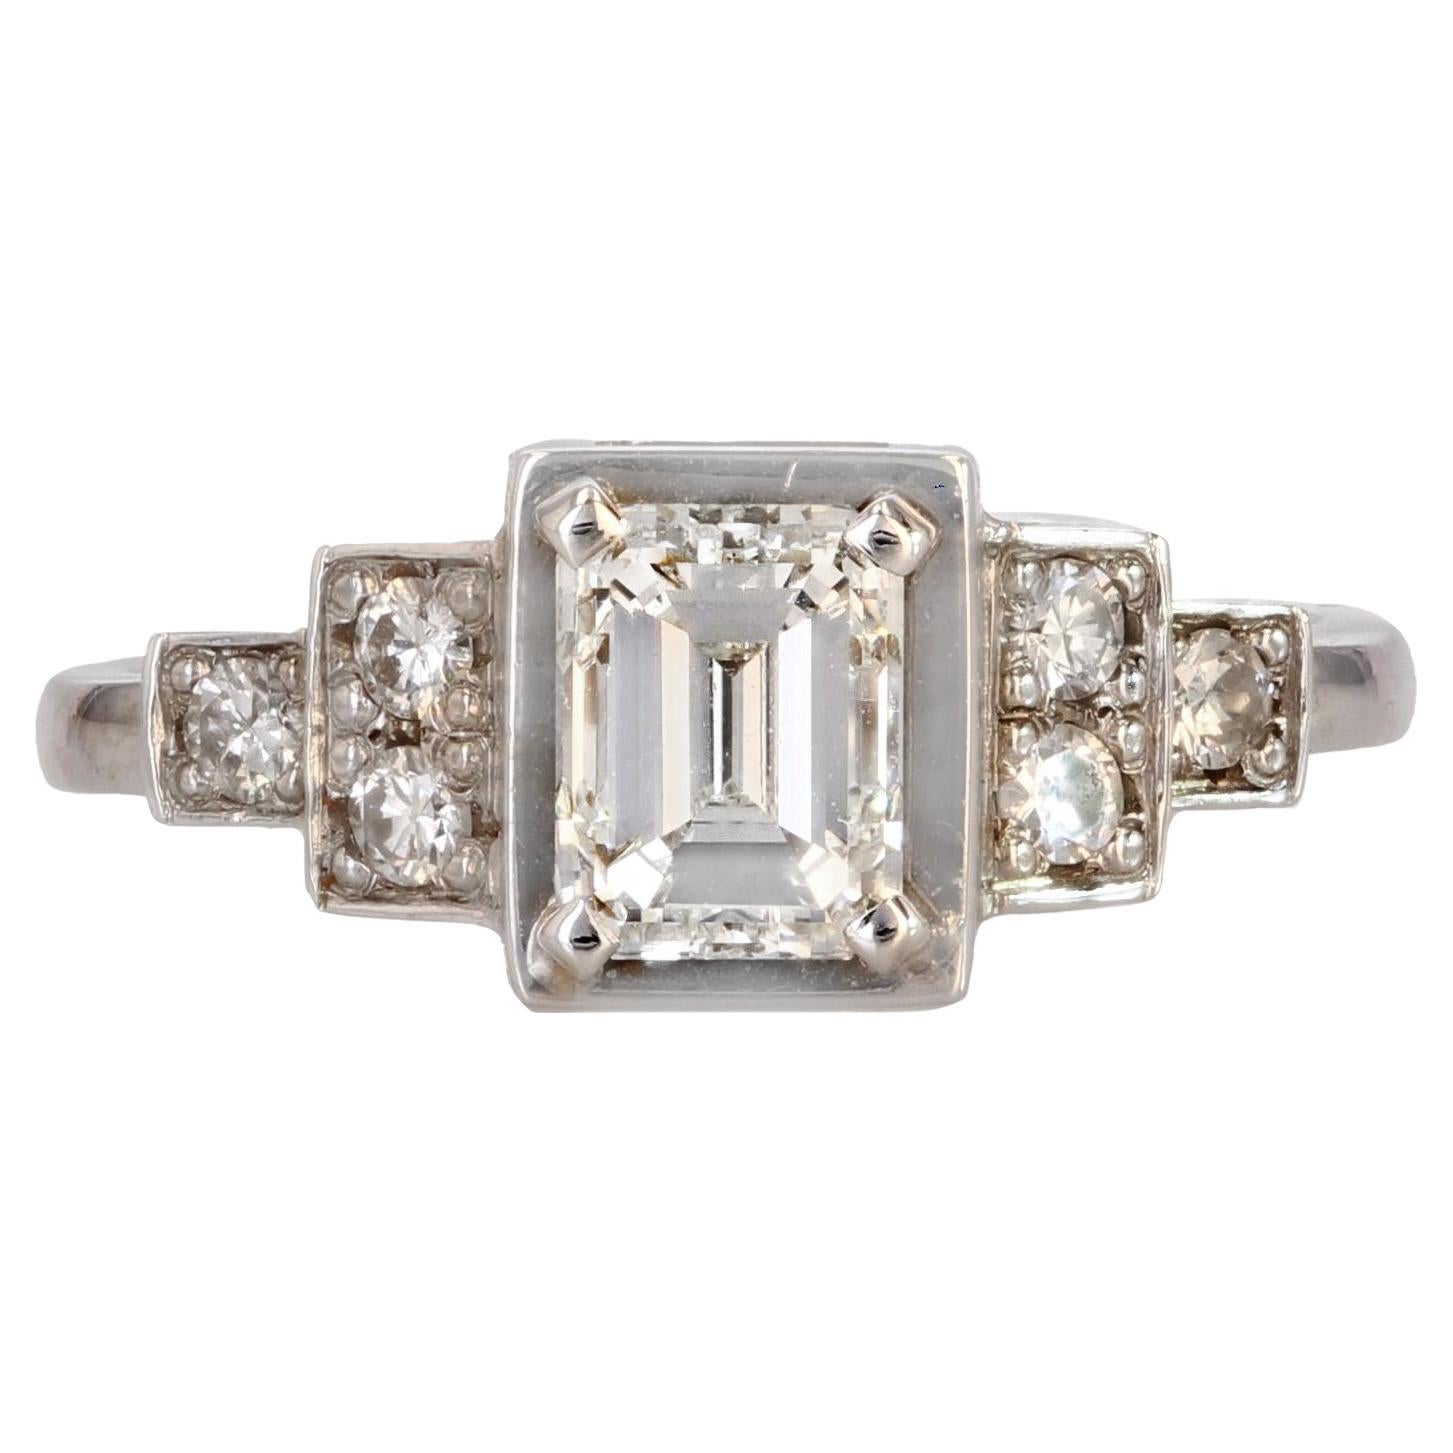 Art Deco Style Emerald Cut And Brilliant Cut Diamond Gold Ring